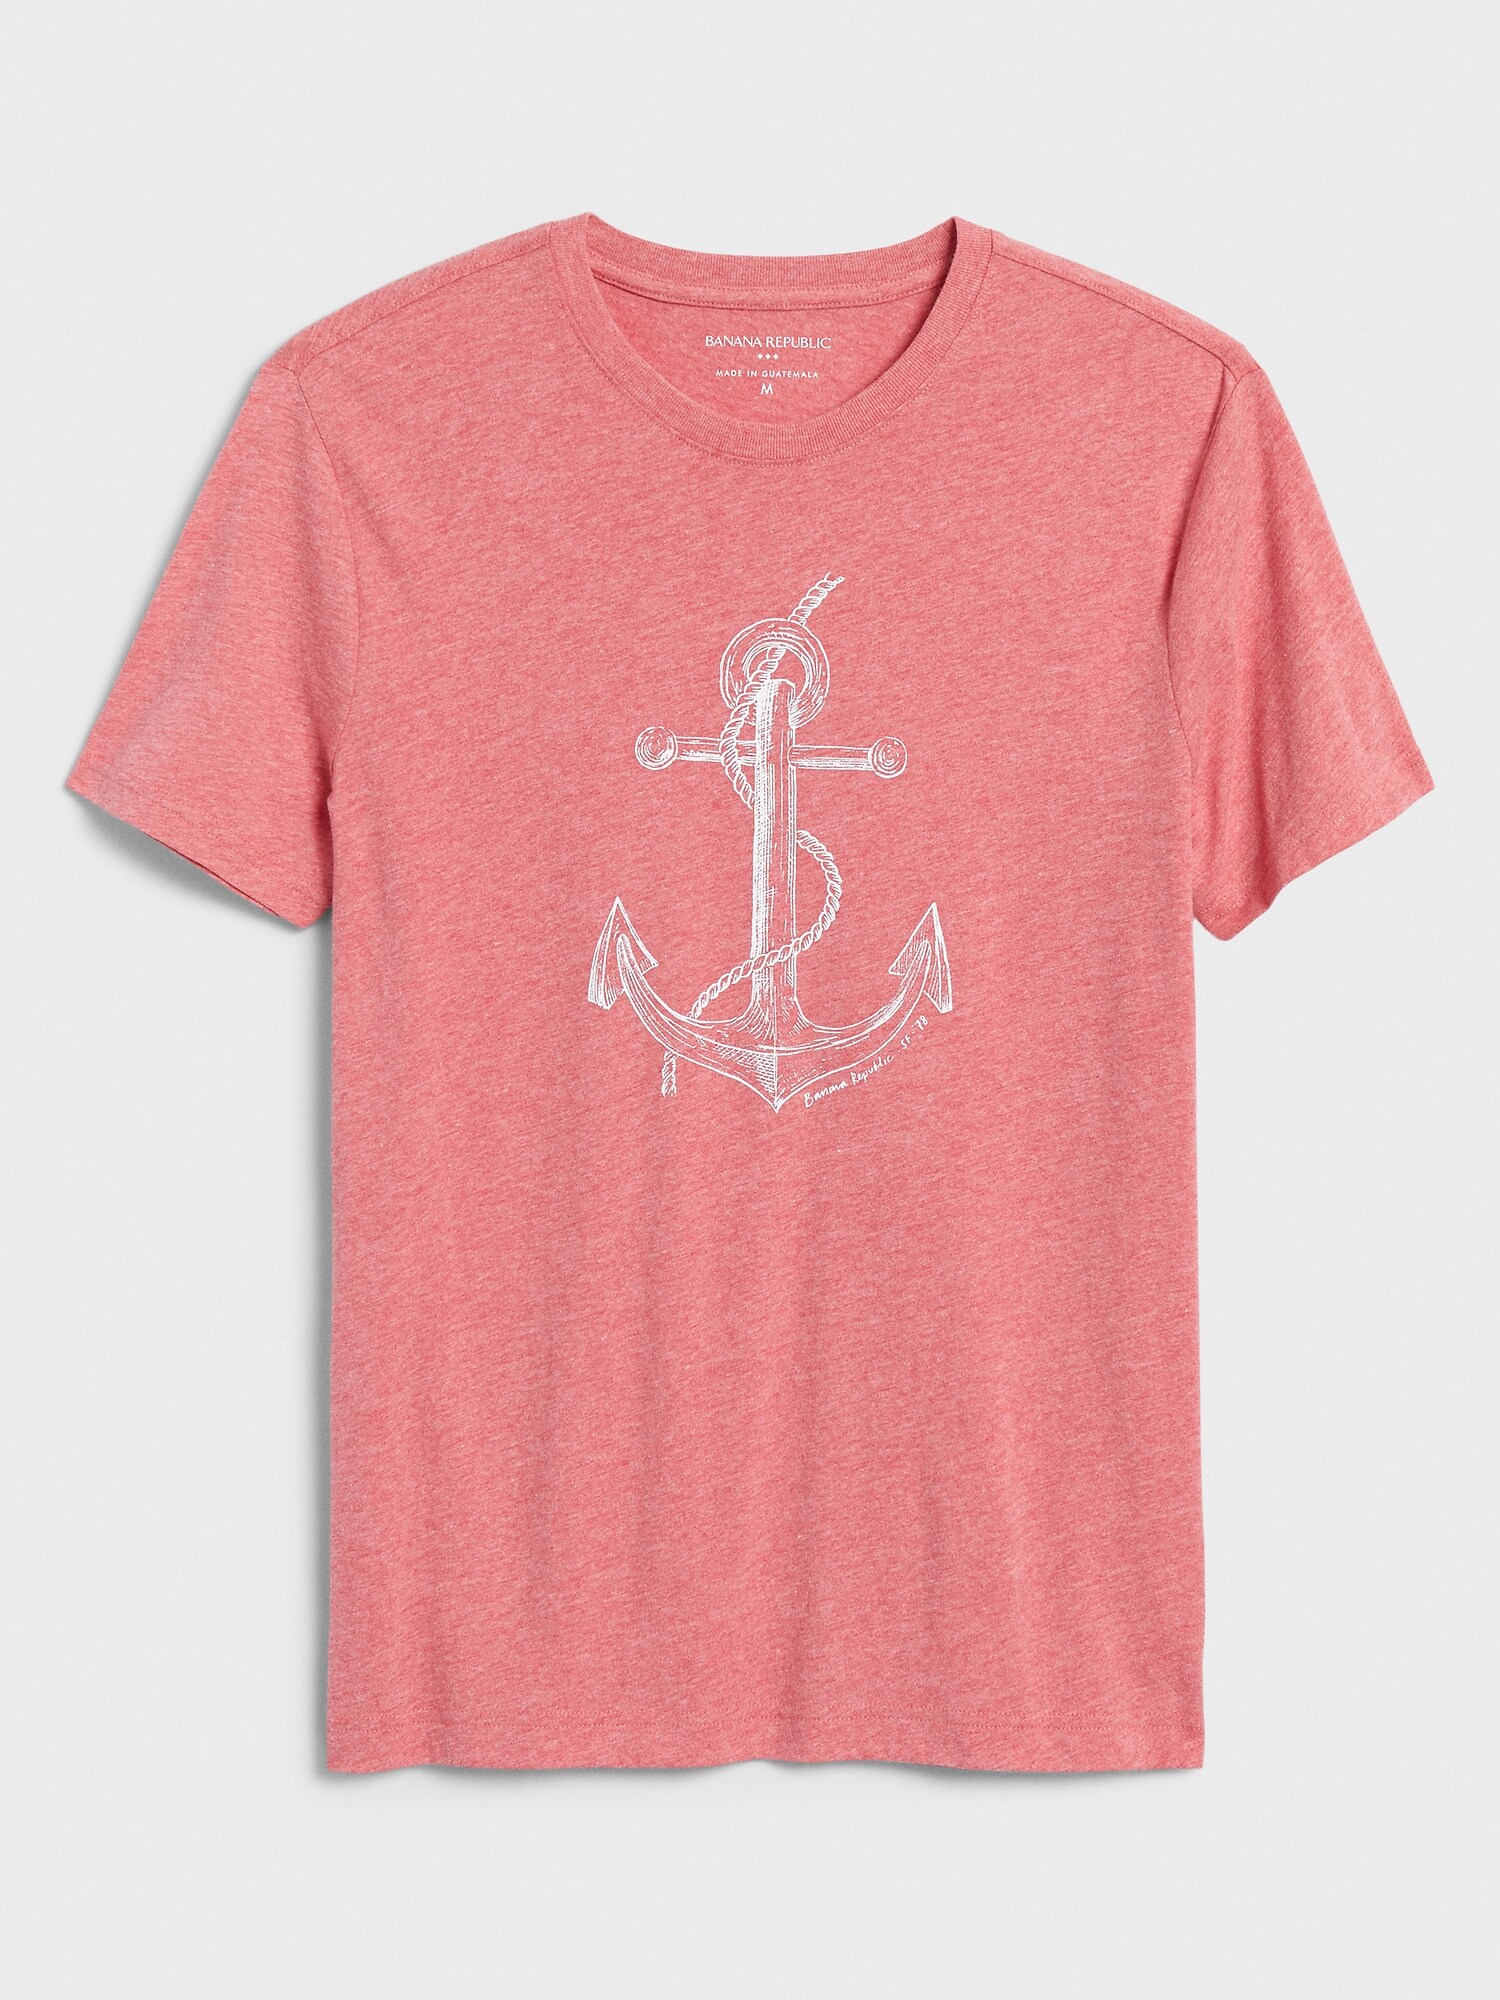 Anchor Pencil Sketch Graphic T-Shirt